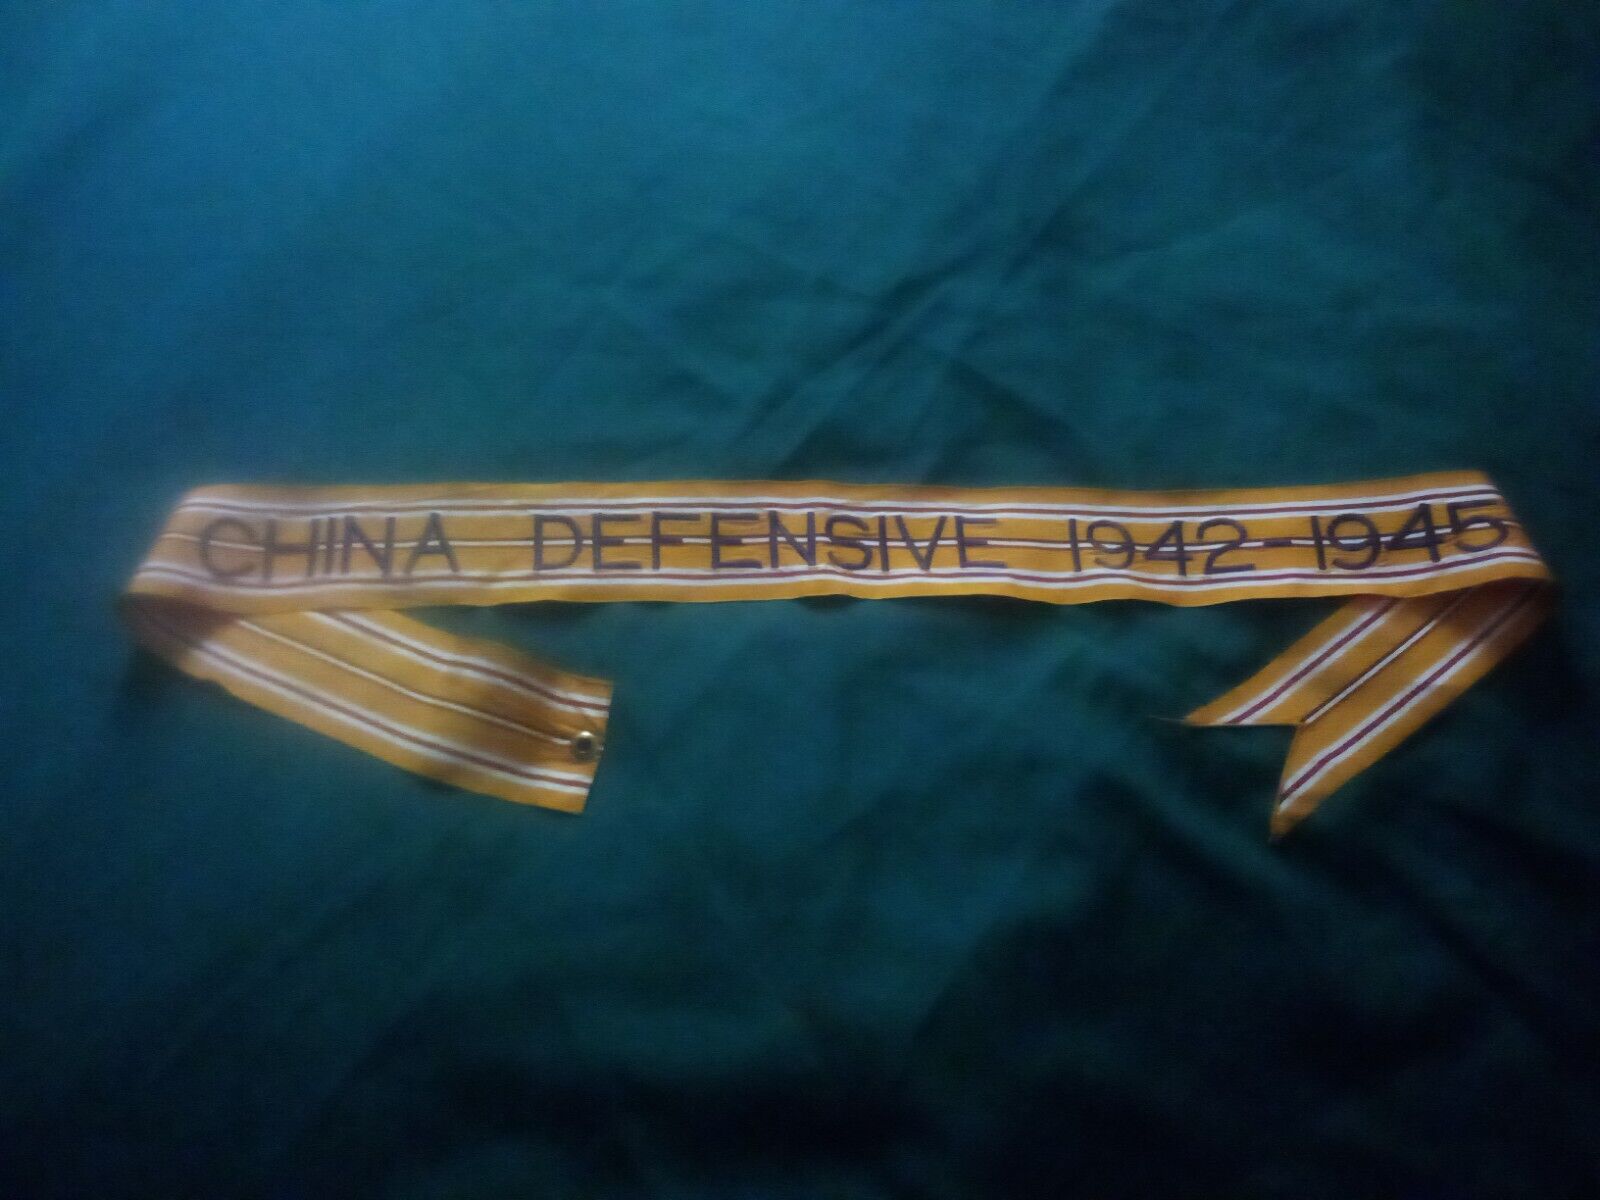 Campaign Streamer/ WW2 Pacific/ China Defensive 1942-1945/ Used